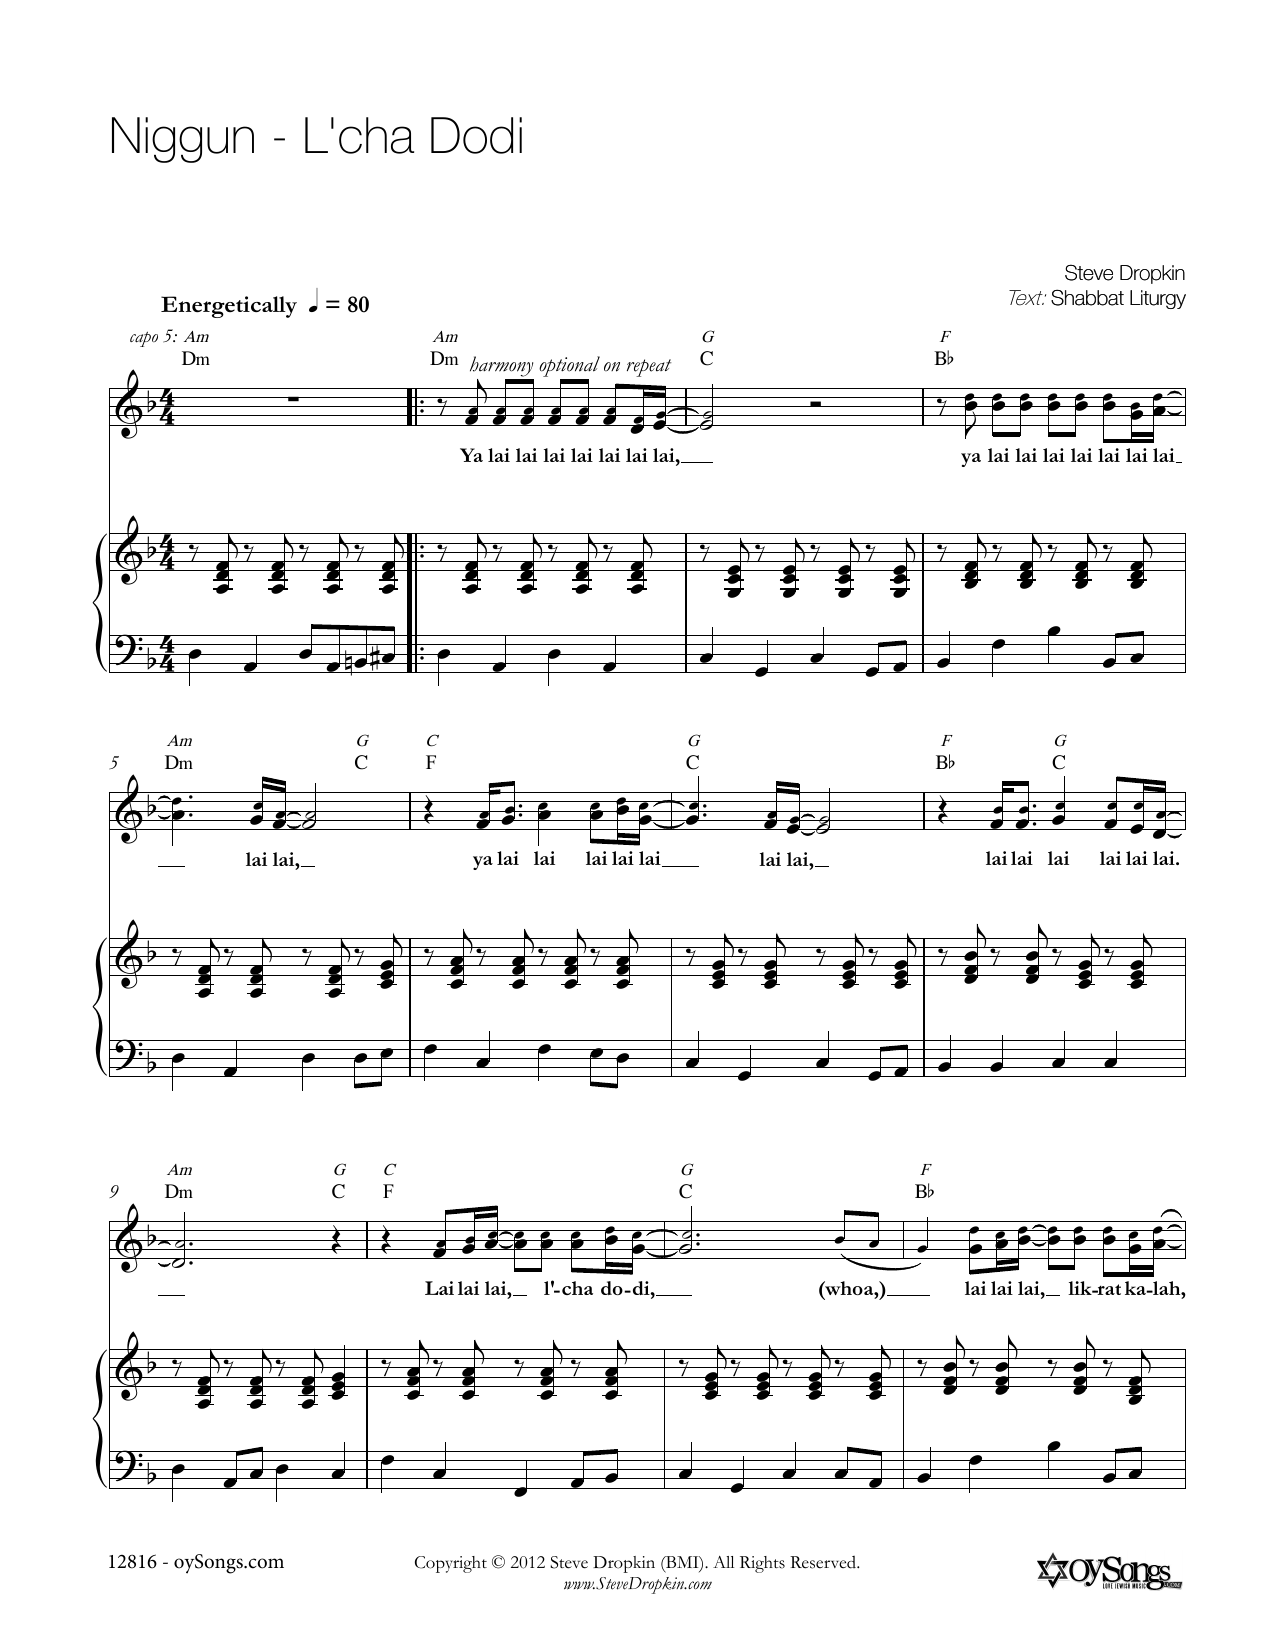 Steve Dropkin Niggun - L'chah Dodi Sheet Music Notes & Chords for Melody Line, Lyrics & Chords - Download or Print PDF